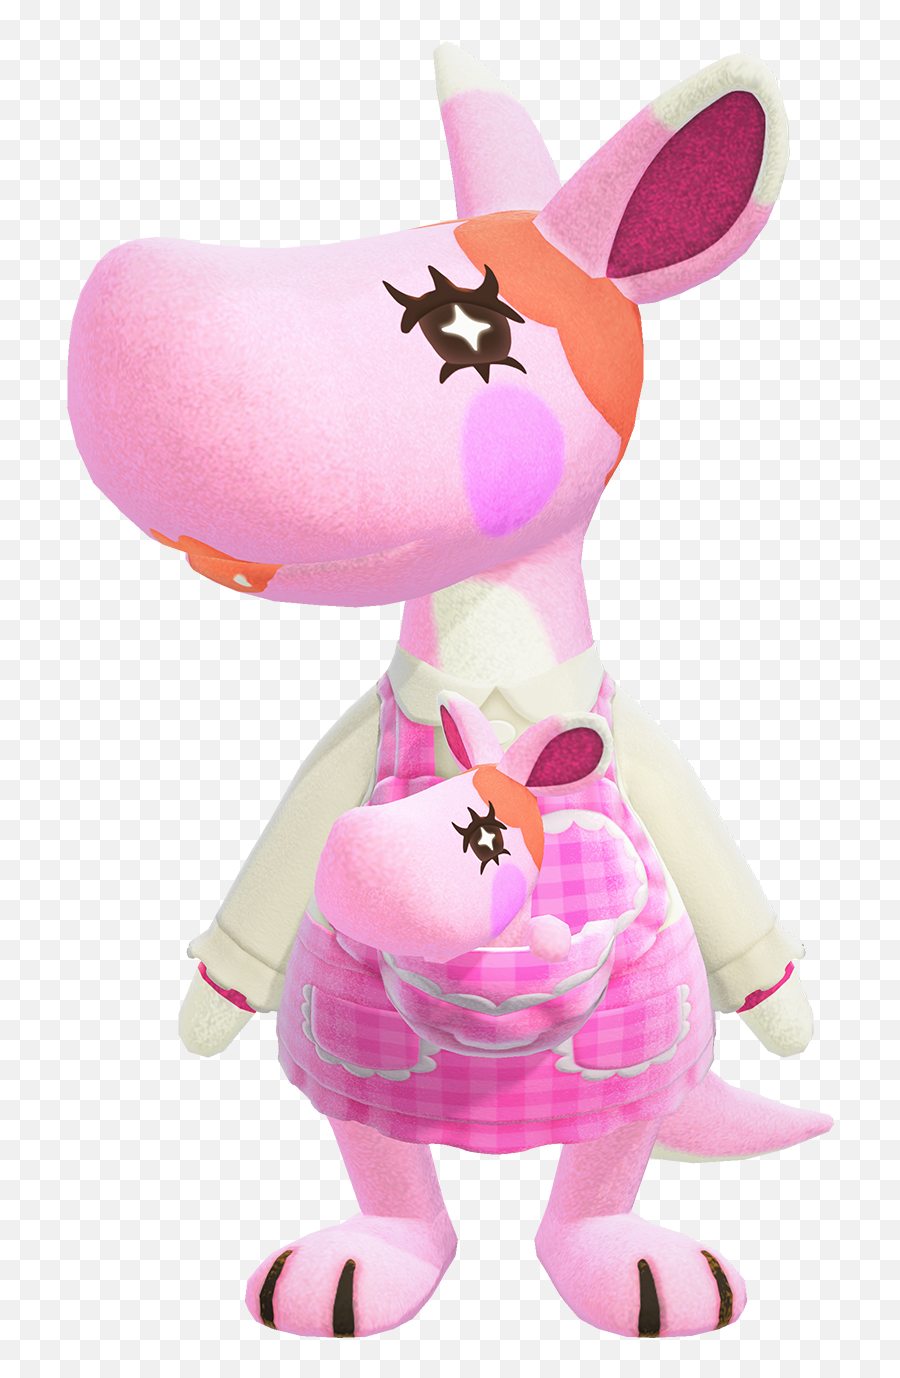 Marcie - Animal Crossing Wiki Nookipedia Marcie Animal Crossing New Horizons Png,Cute Kangaroo Icon Silhouette